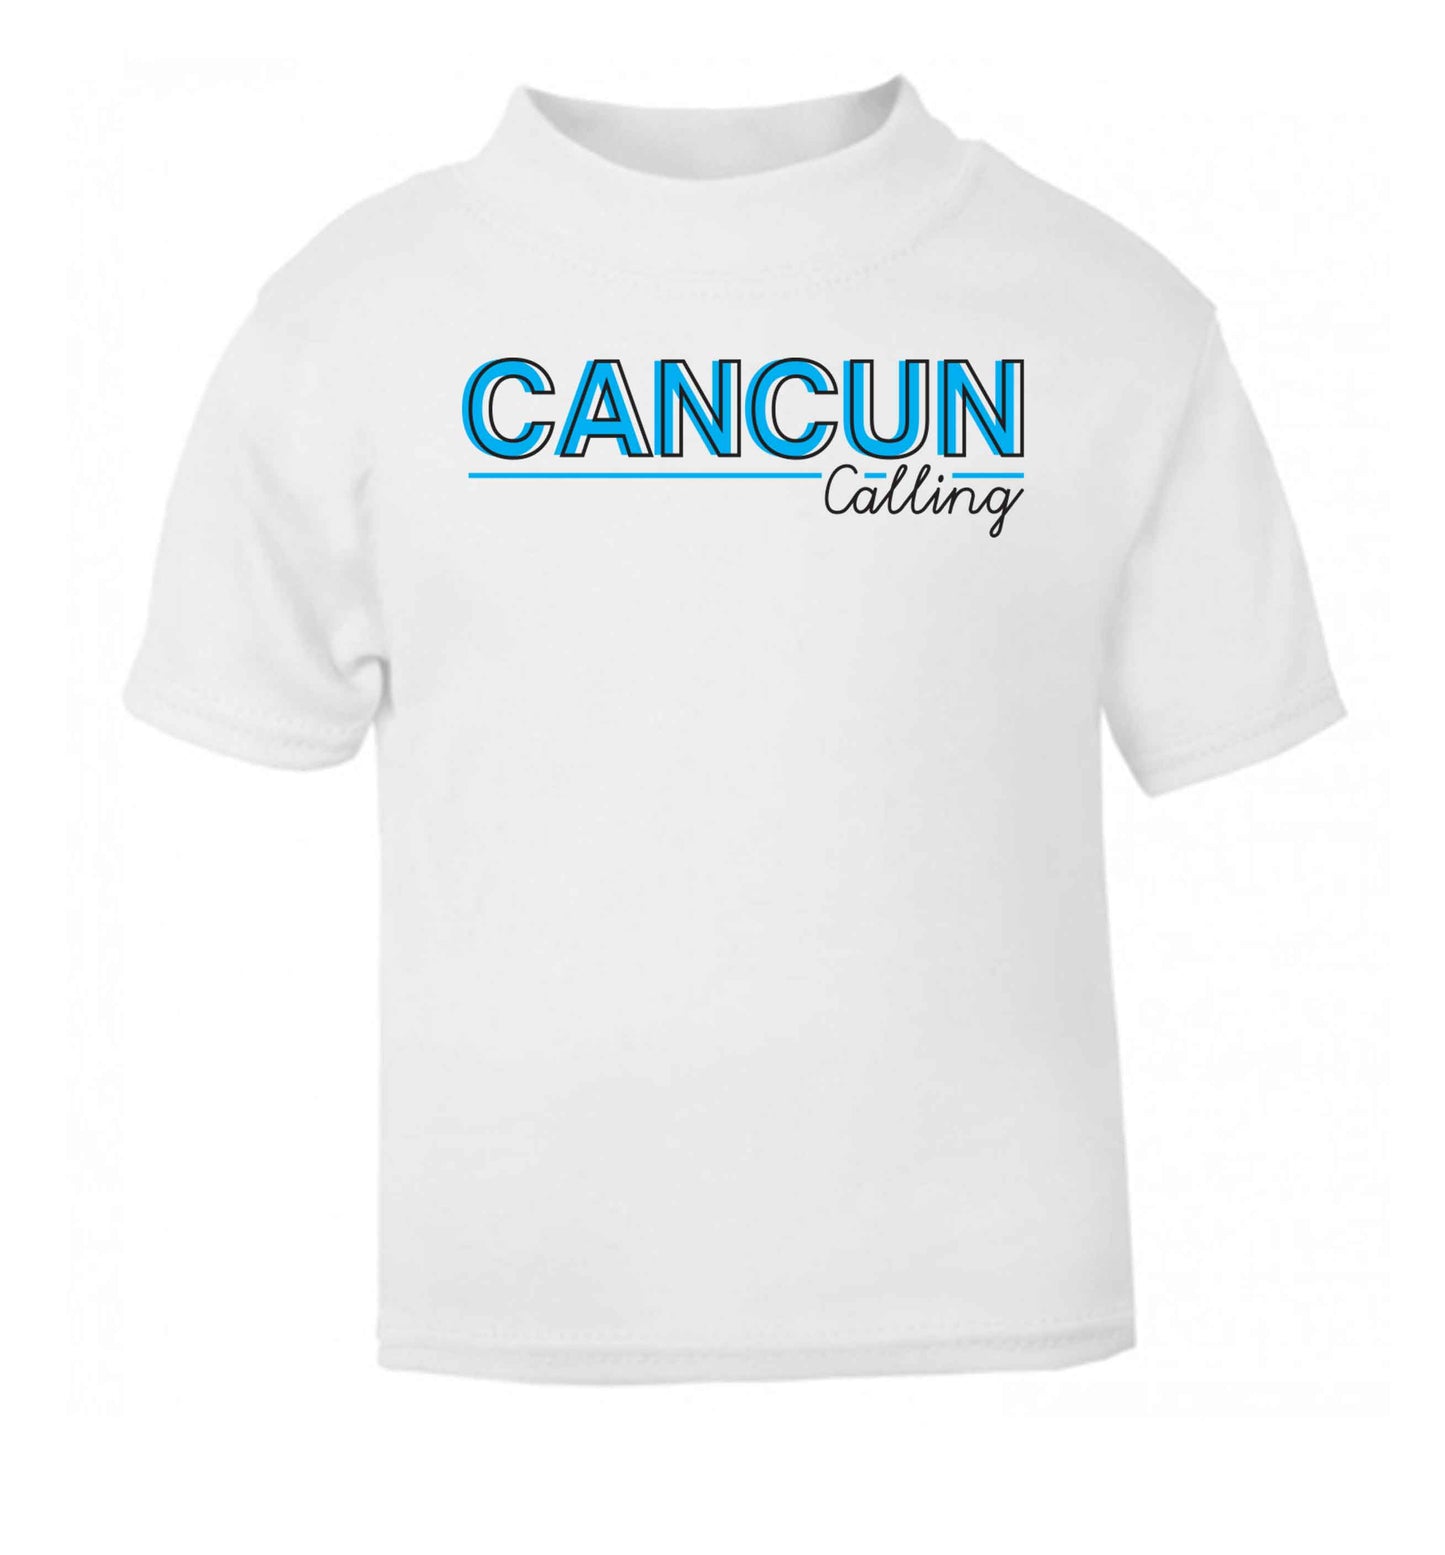 Cancun calling white Baby Toddler Tshirt 2 Years